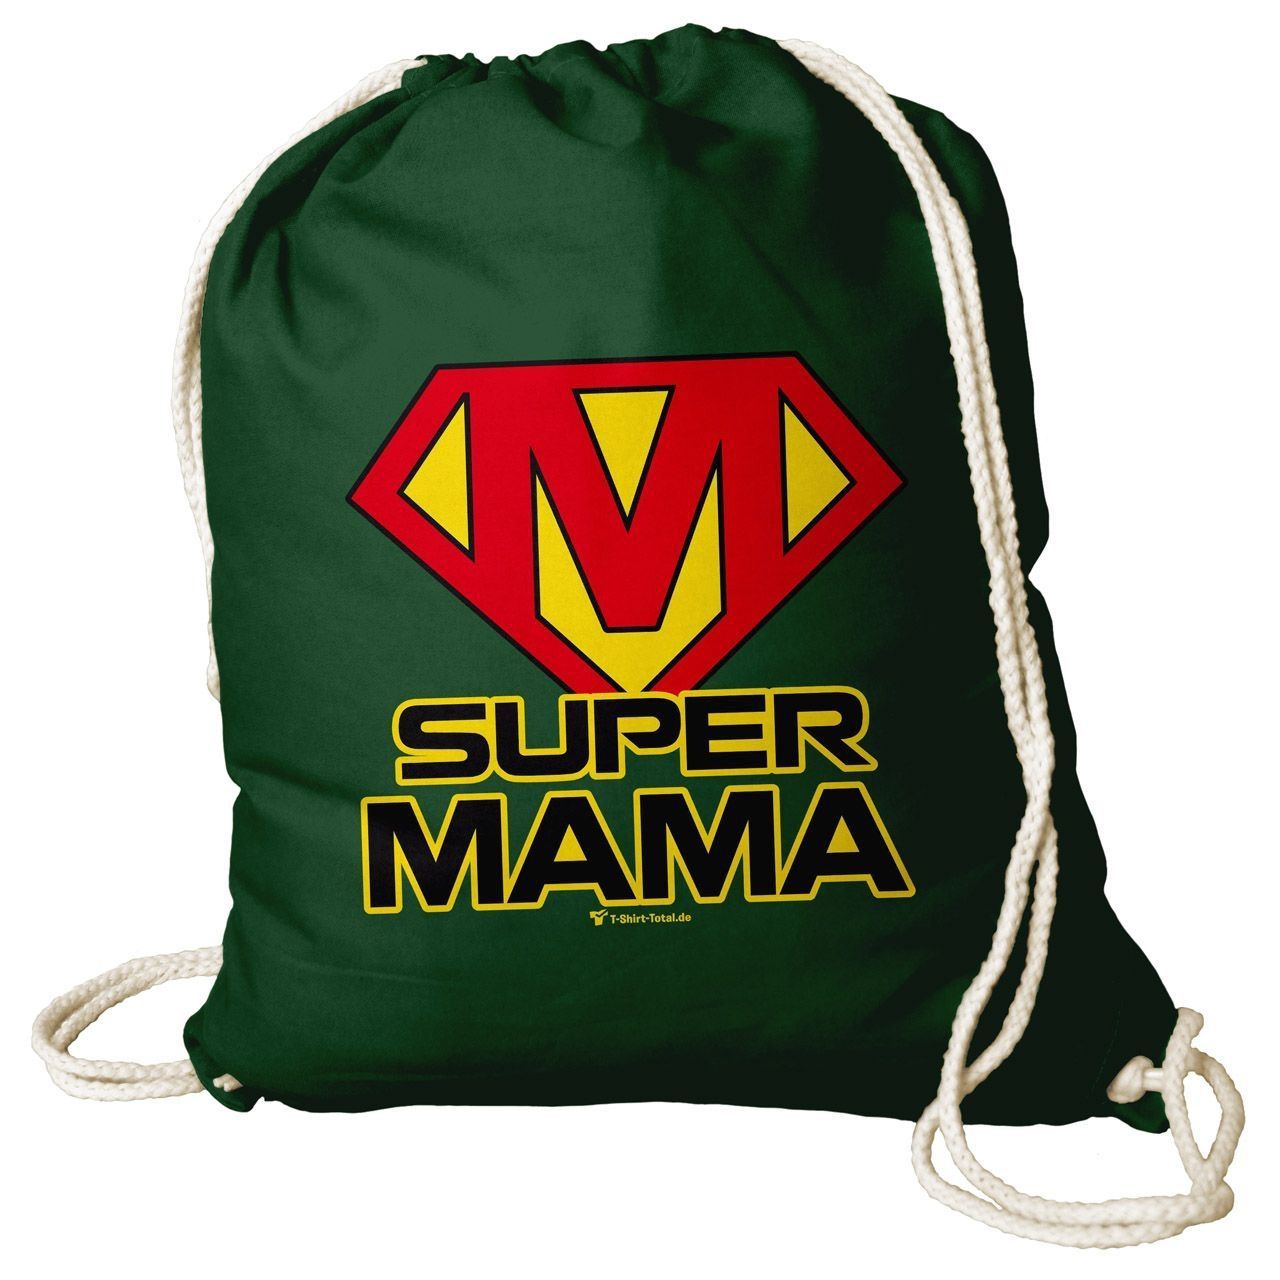 Super Mama Rucksack Beutel dunkelgrün